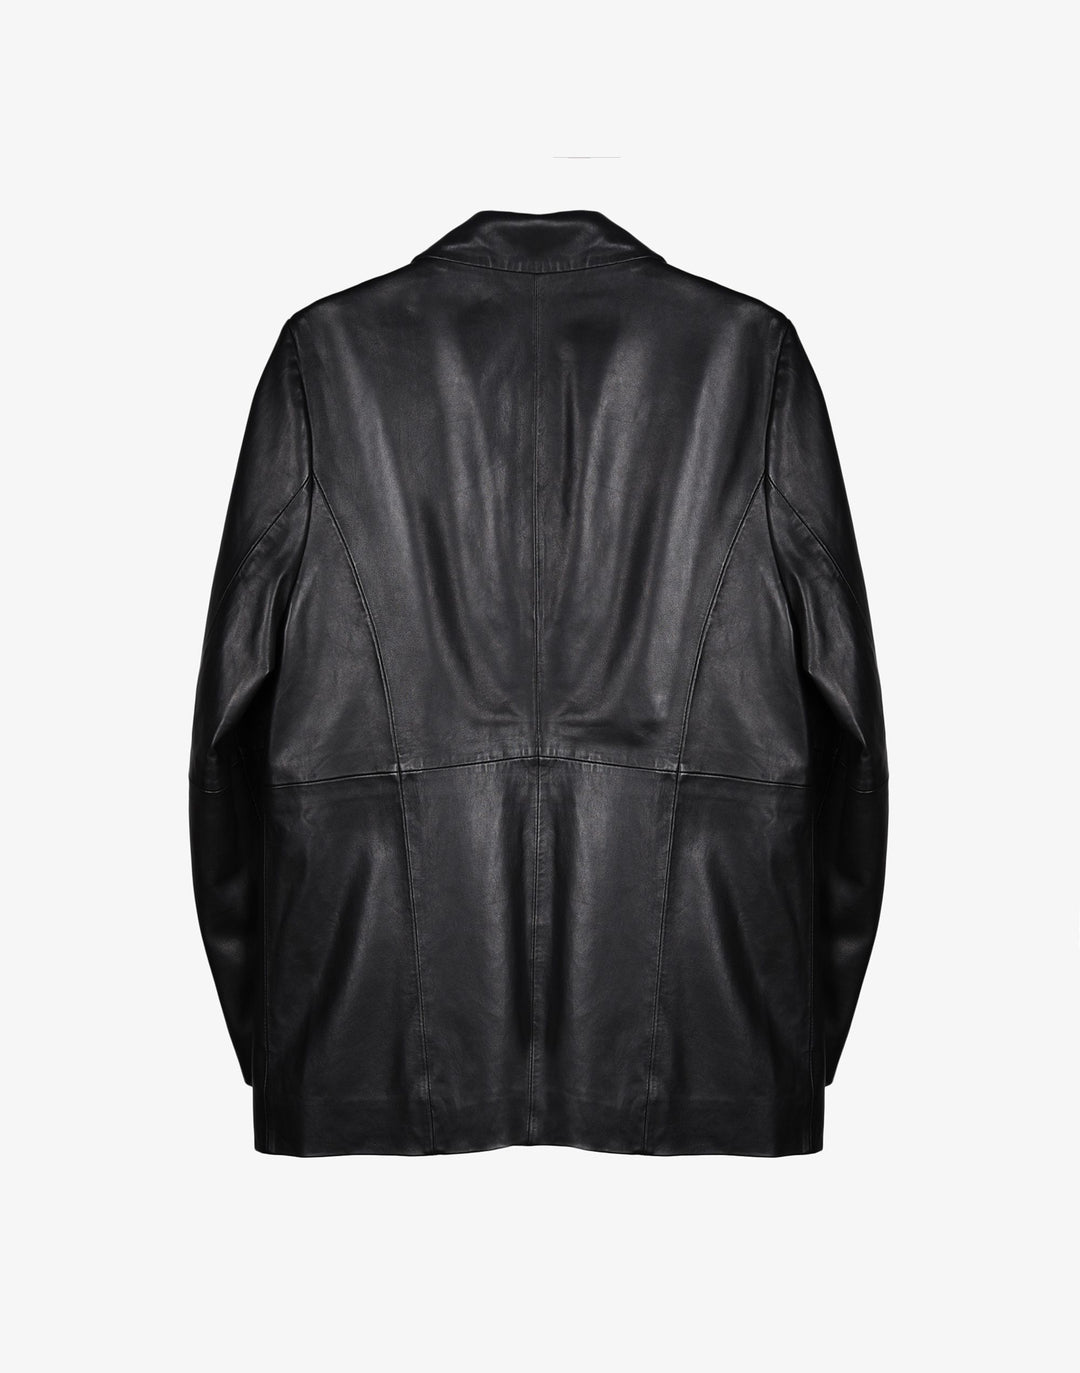 Leather Big O® Key Ring - Back in Black Croc-Embossed